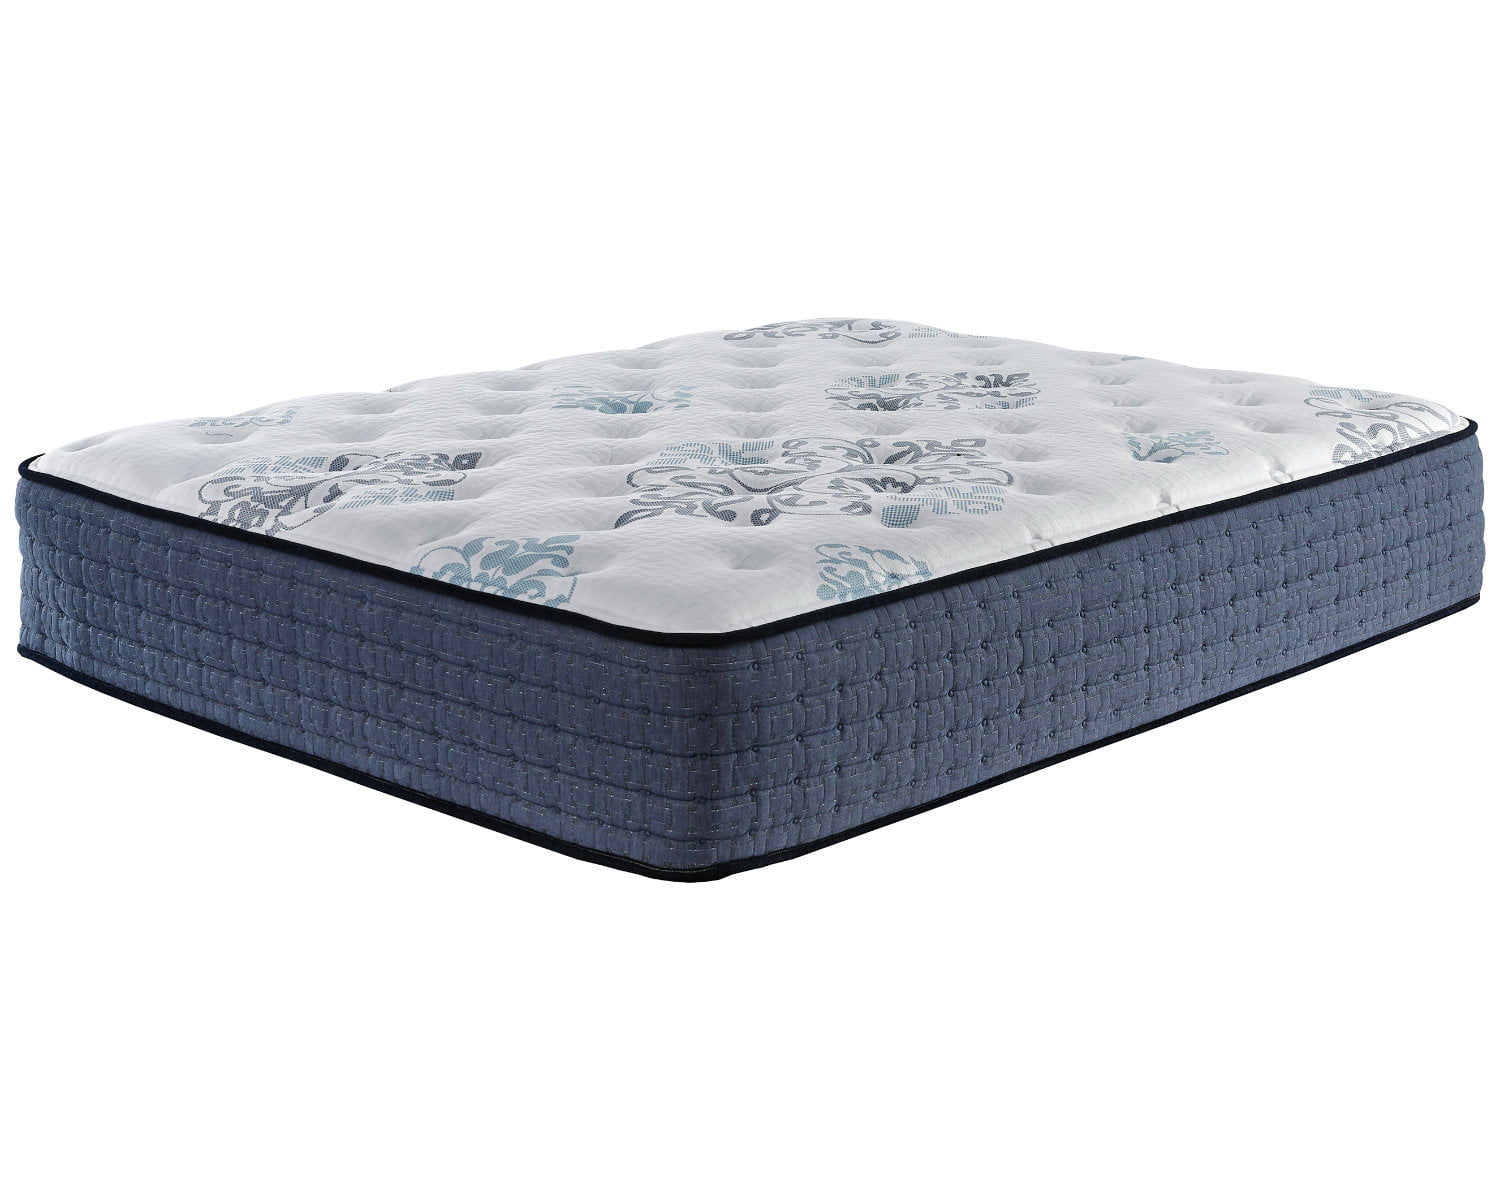 ashley queen mattress limited edition m62531